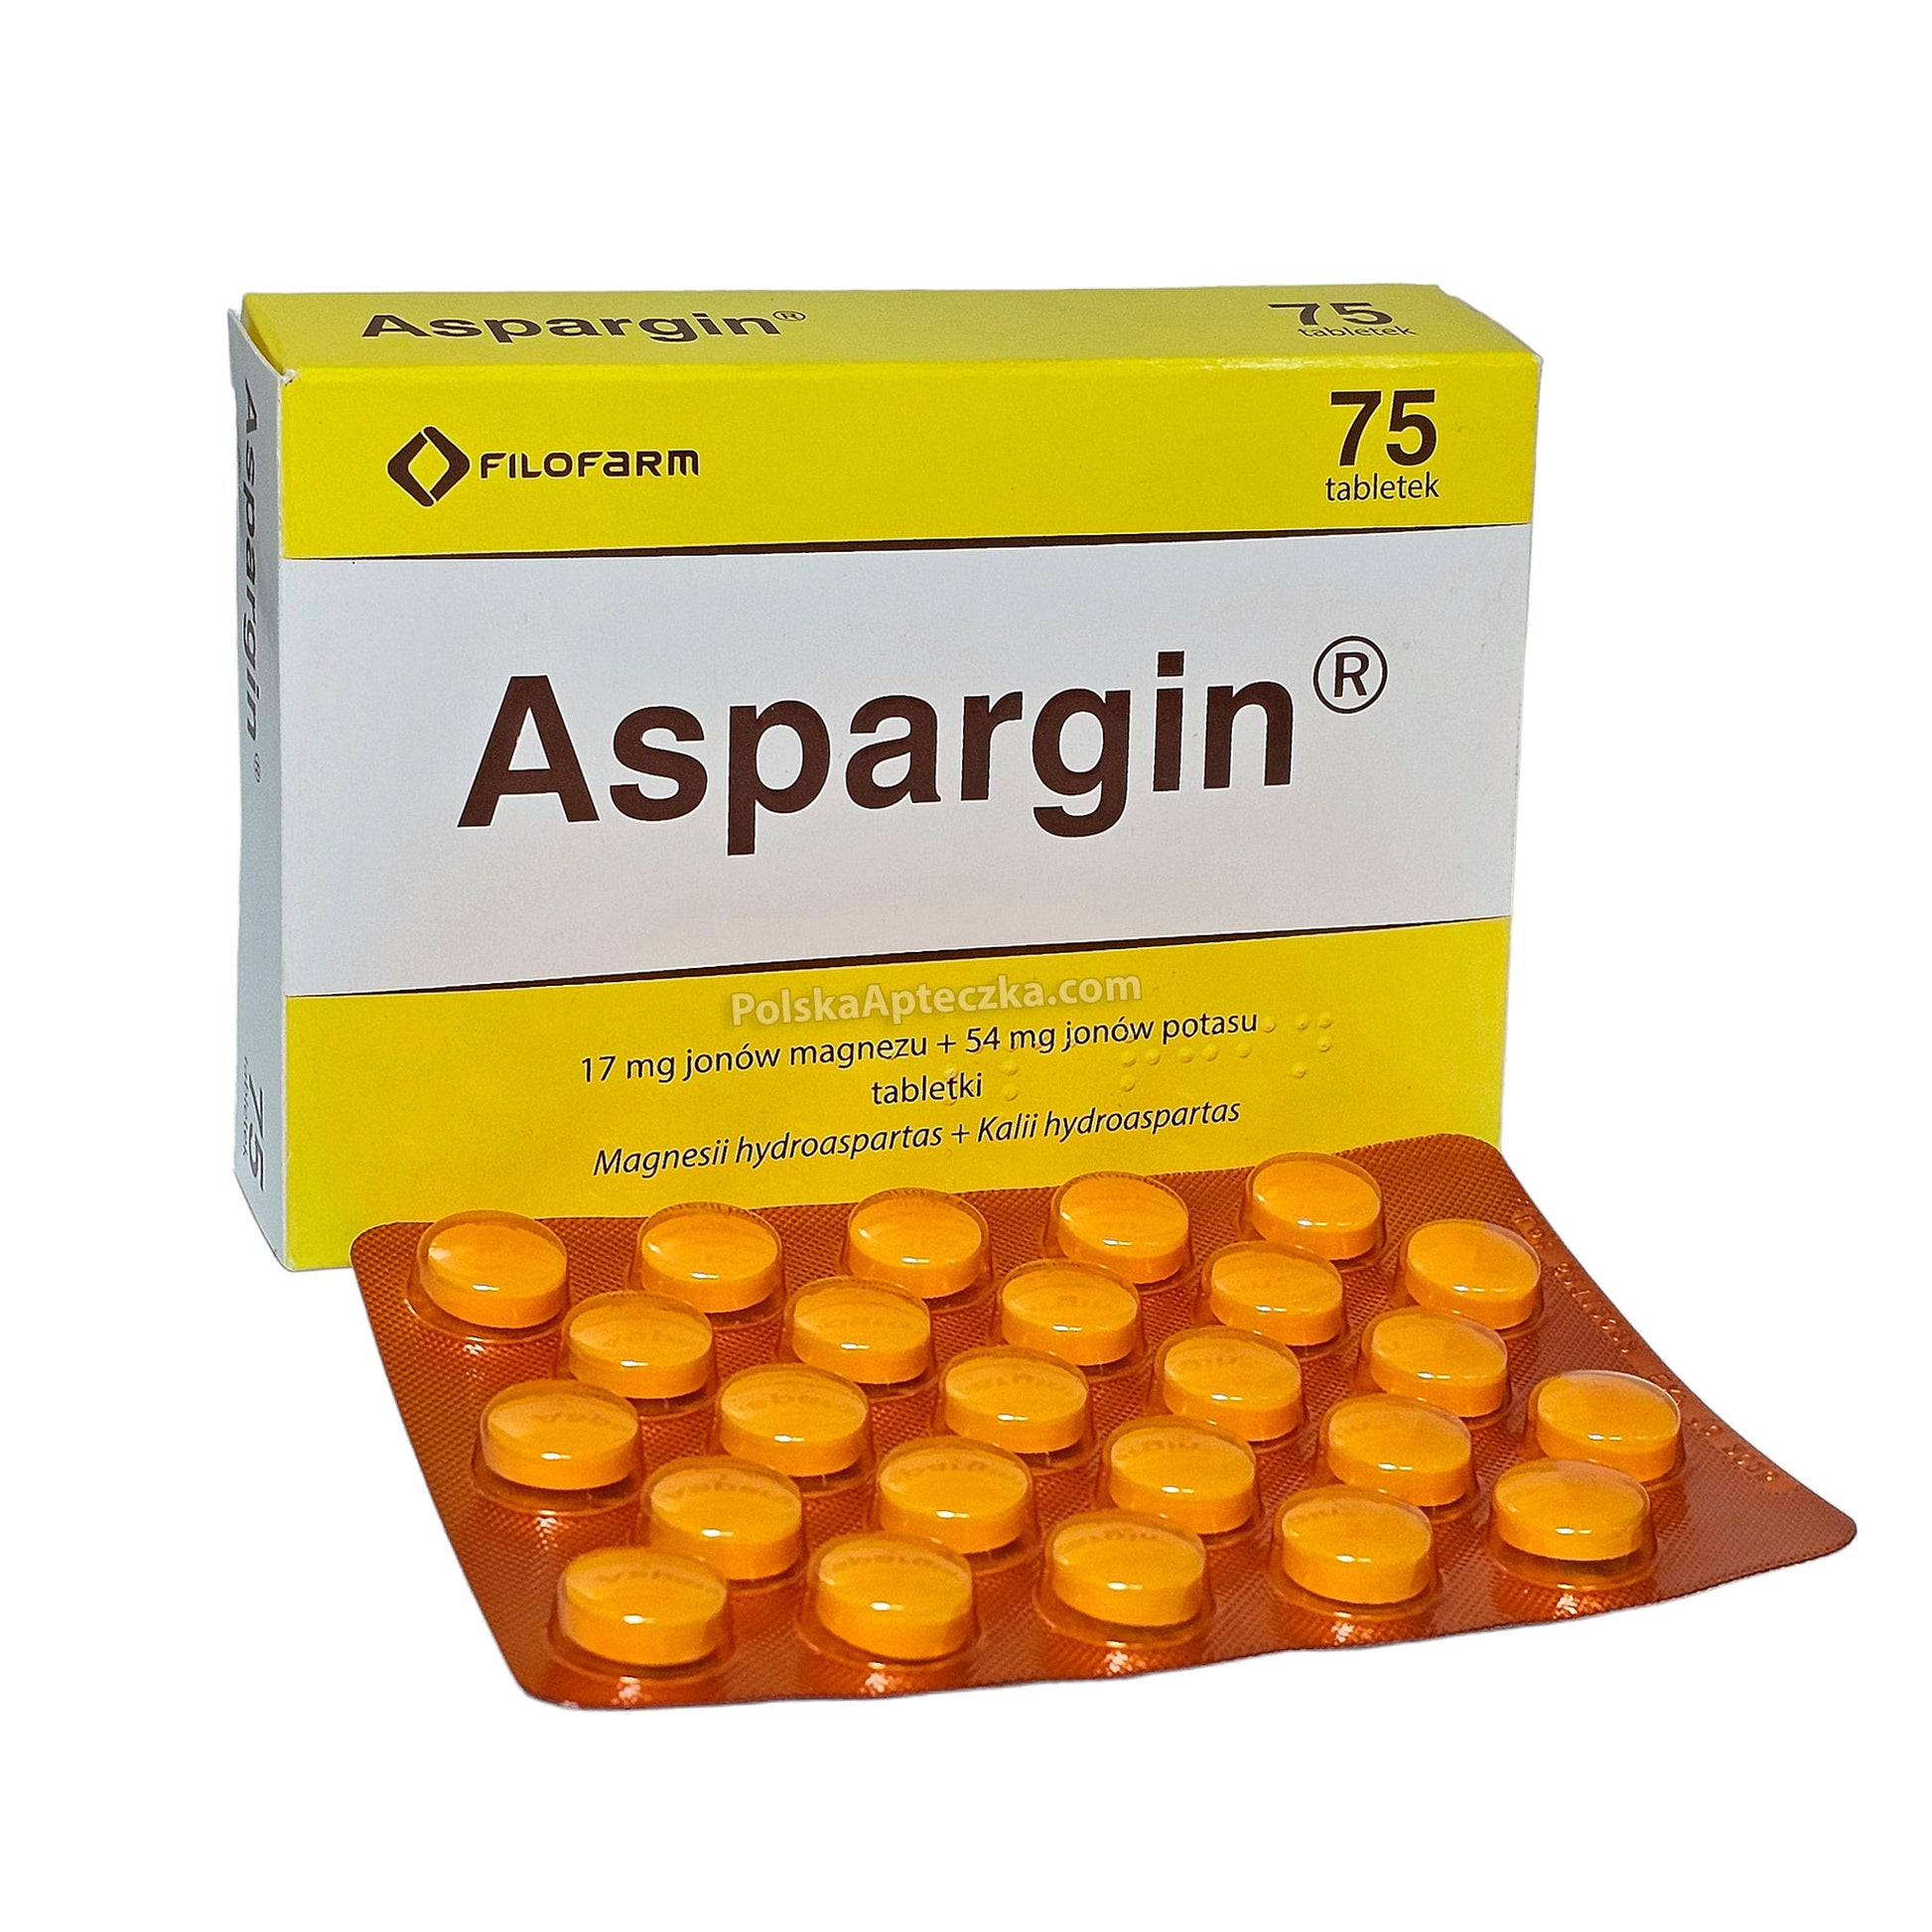 aspargin tablets